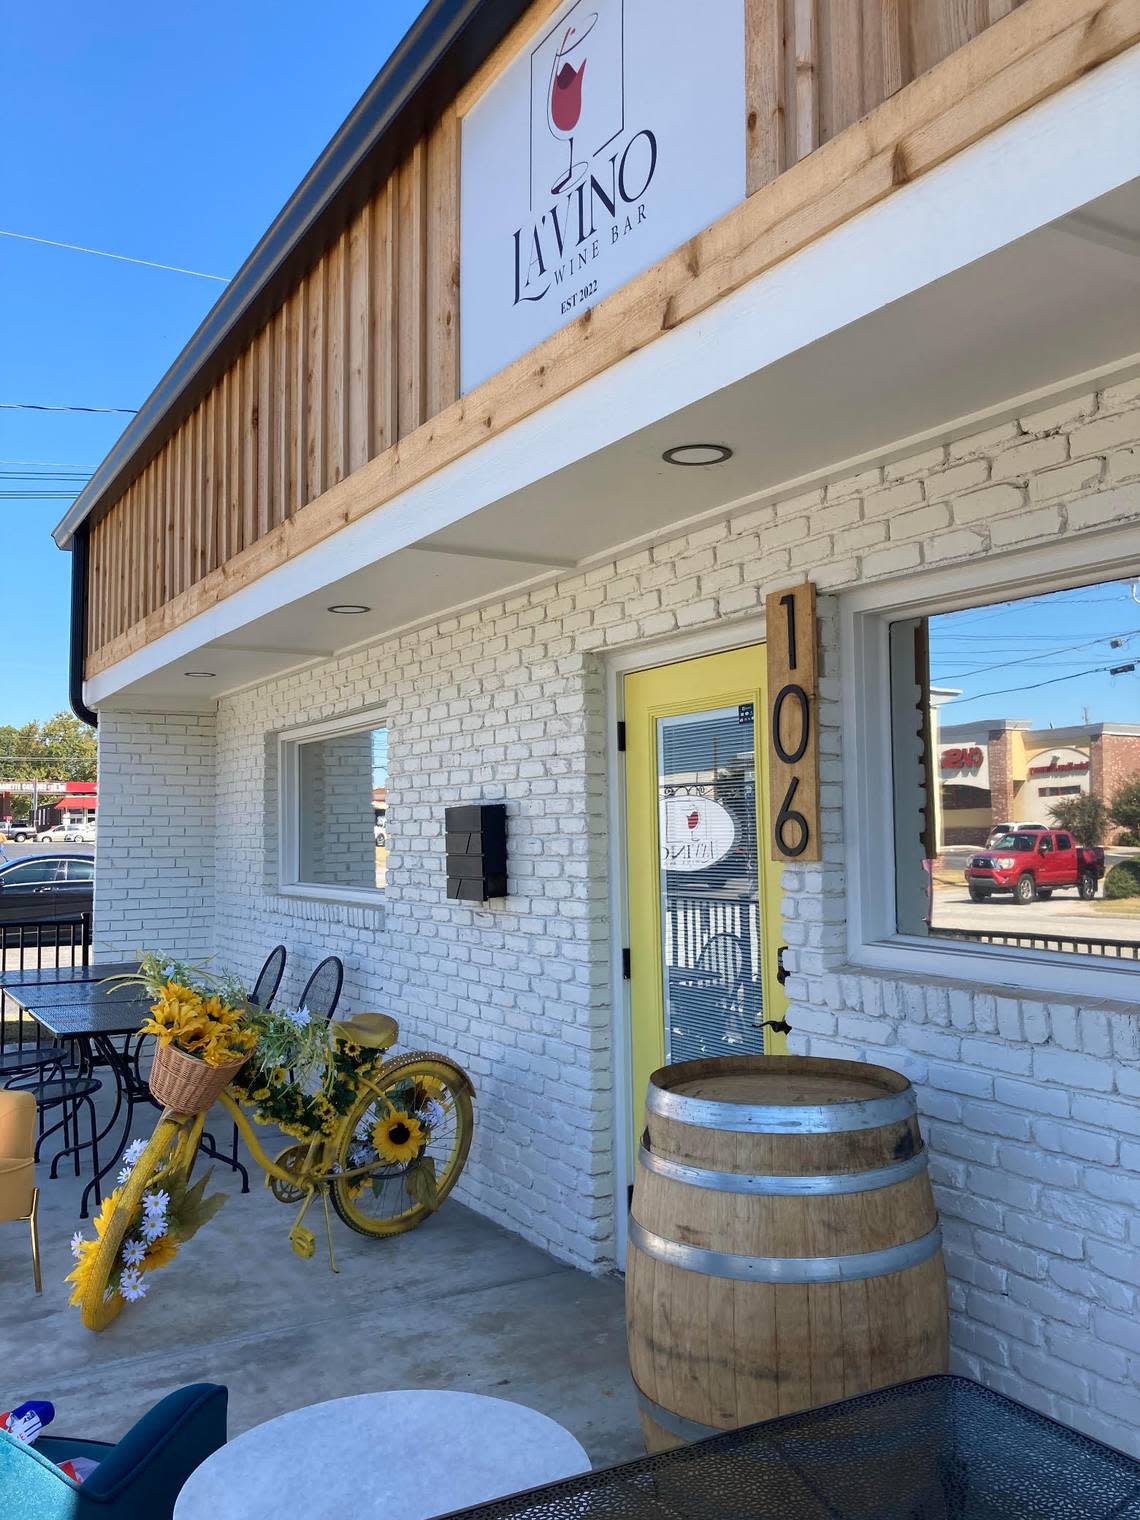 La’Vino Wine Bar opens in Warner Robins.